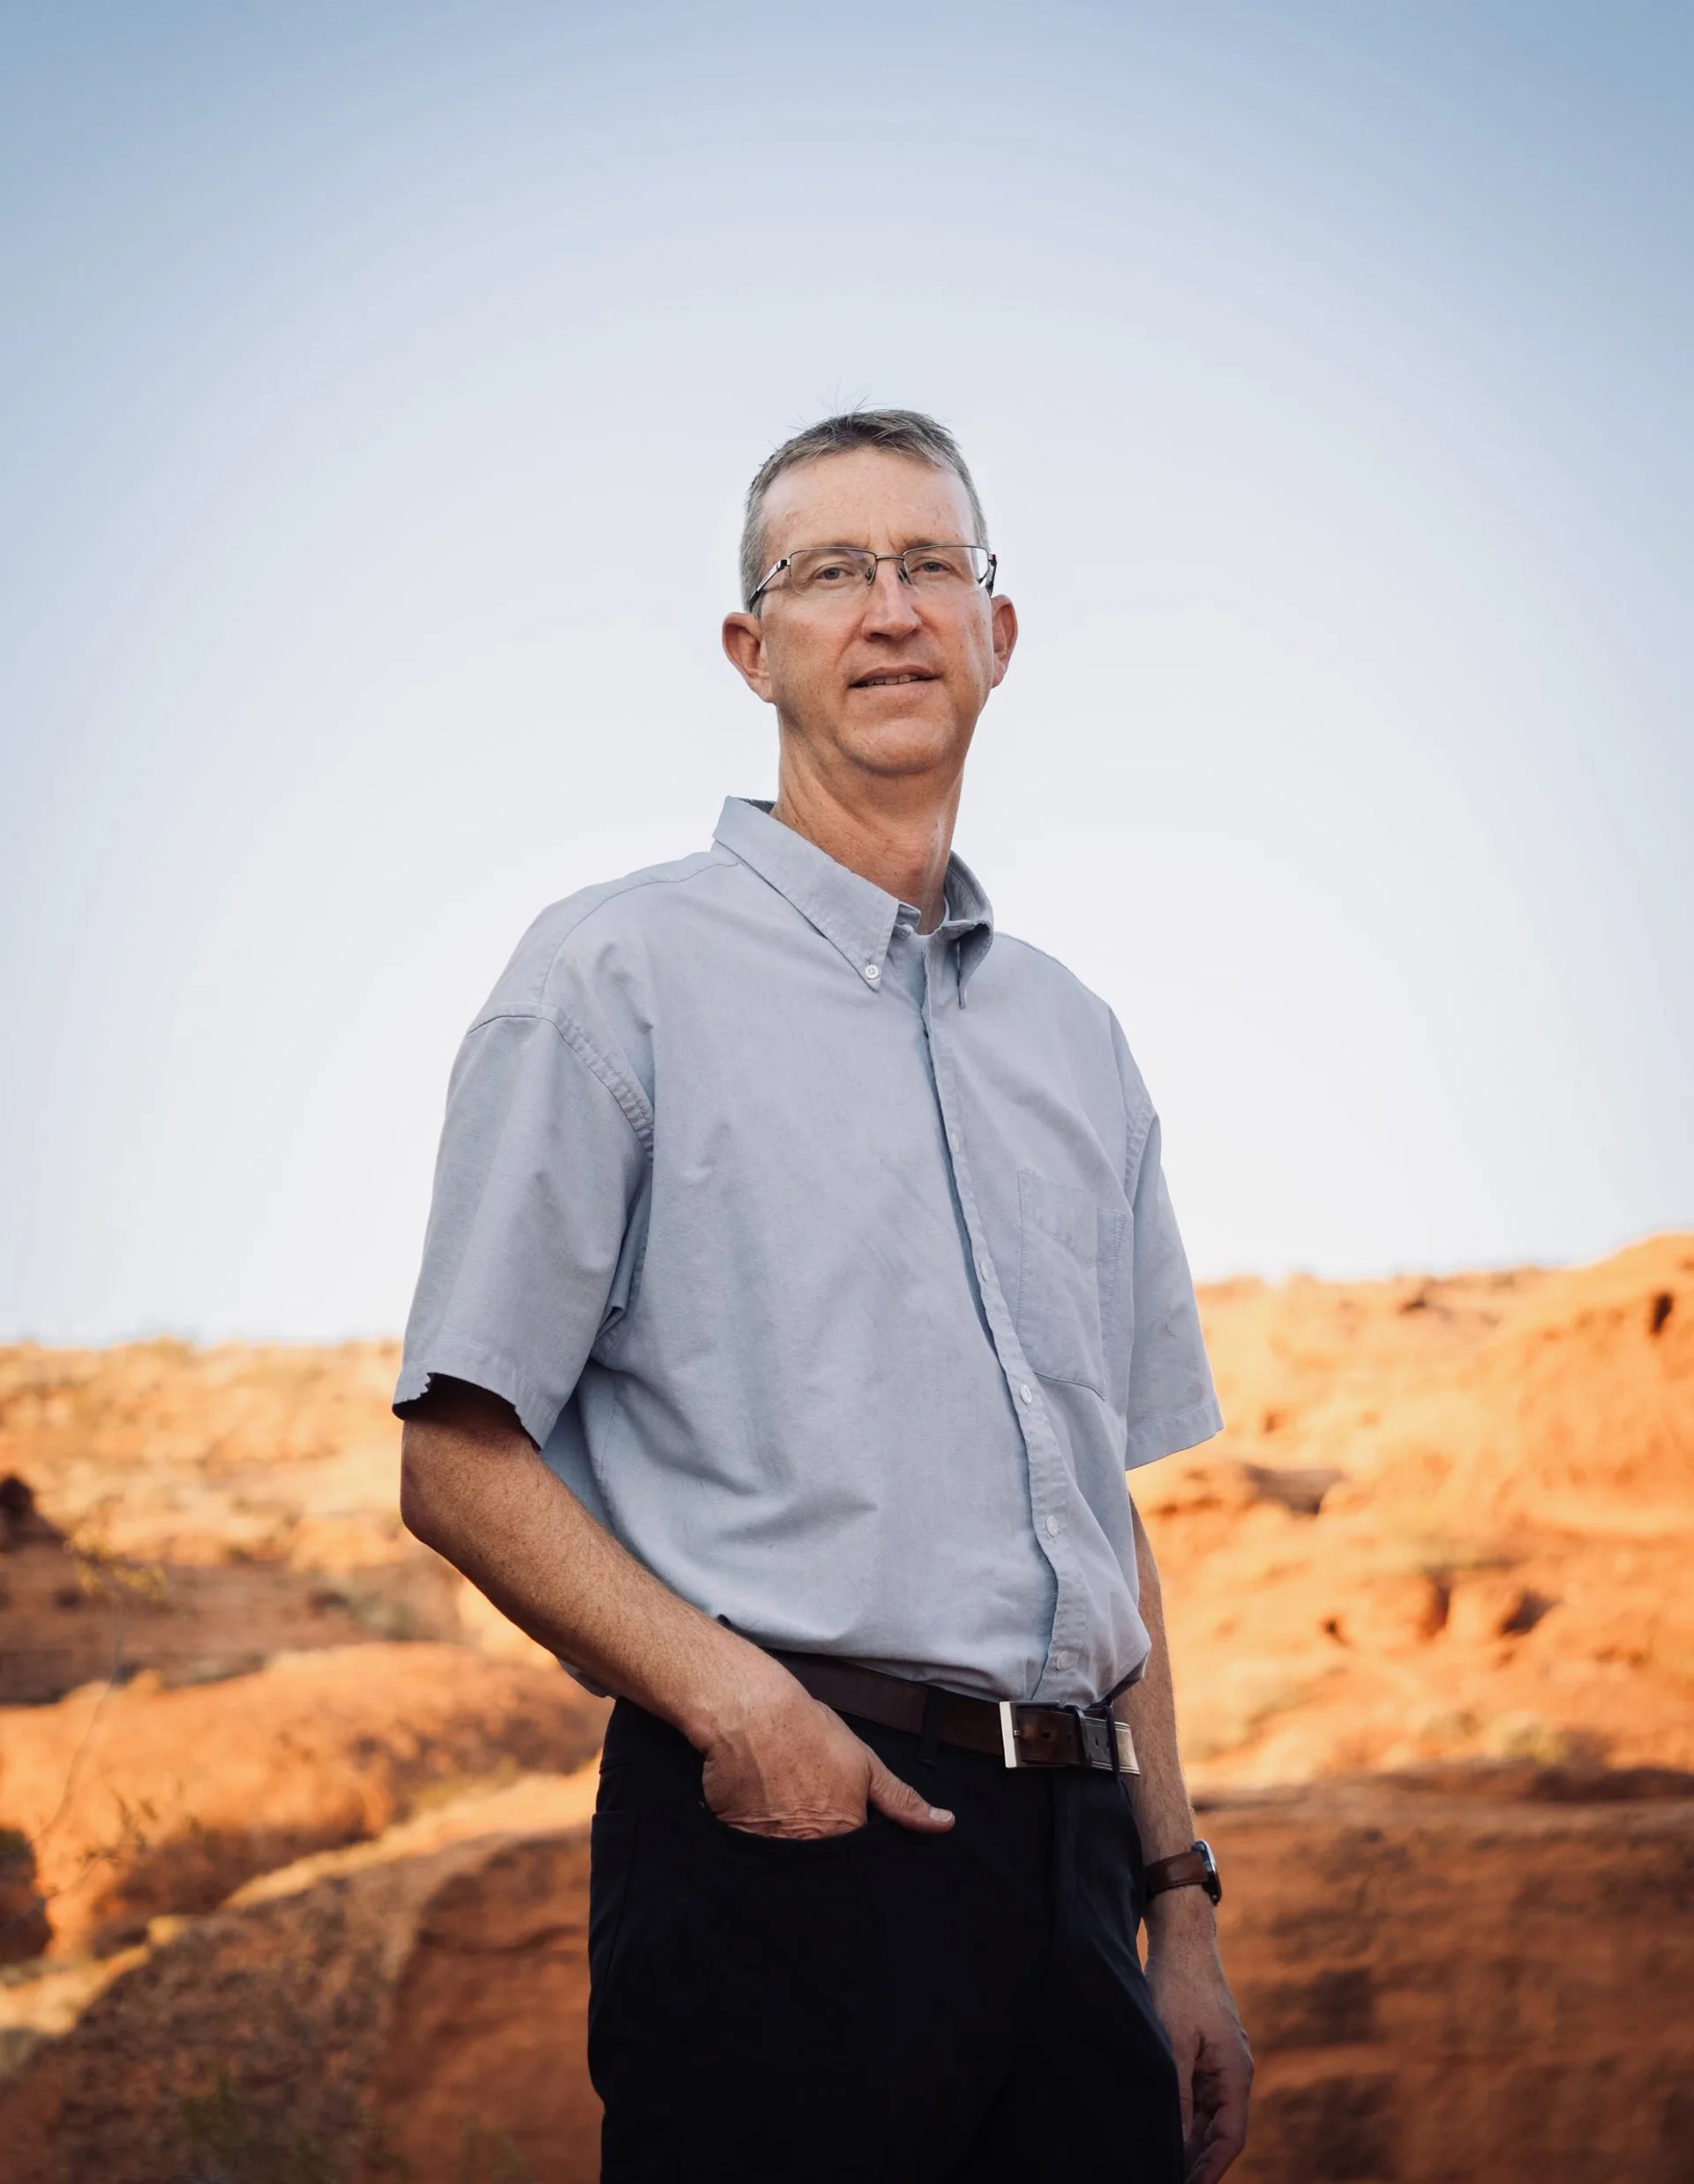 Dr. Jared Szymanski in Southern Utah, standing in front of a red rock landscape.